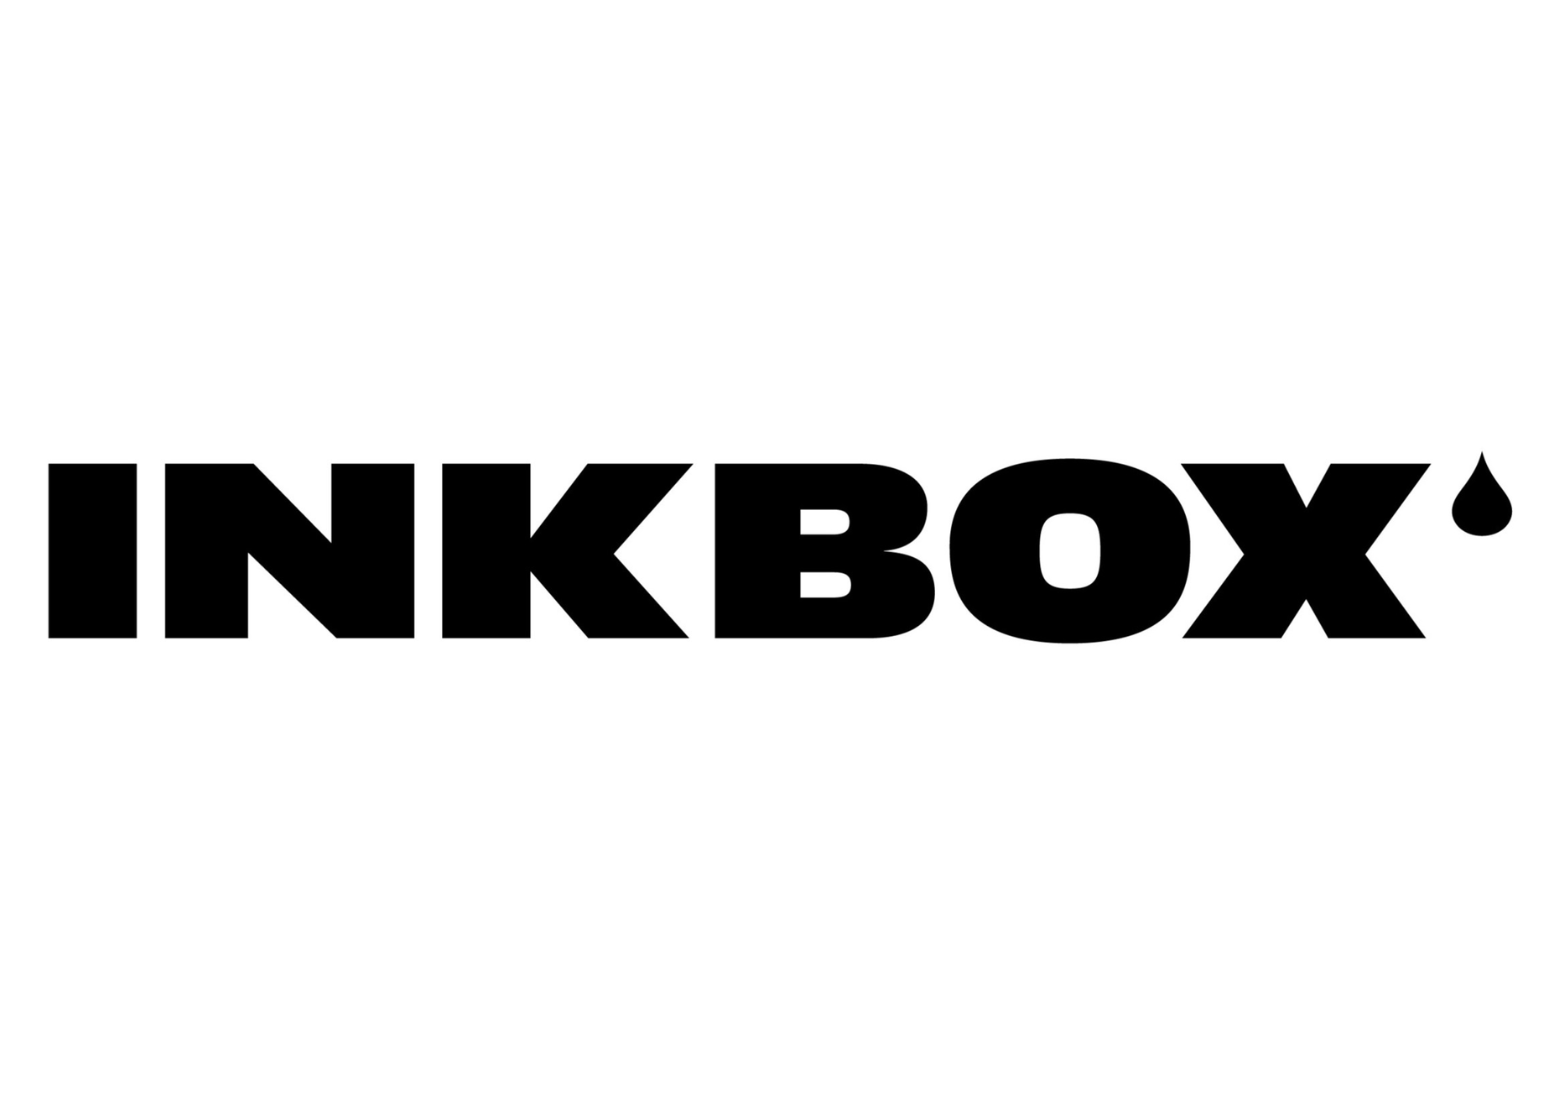 Alumni Marketplace: Inkbox